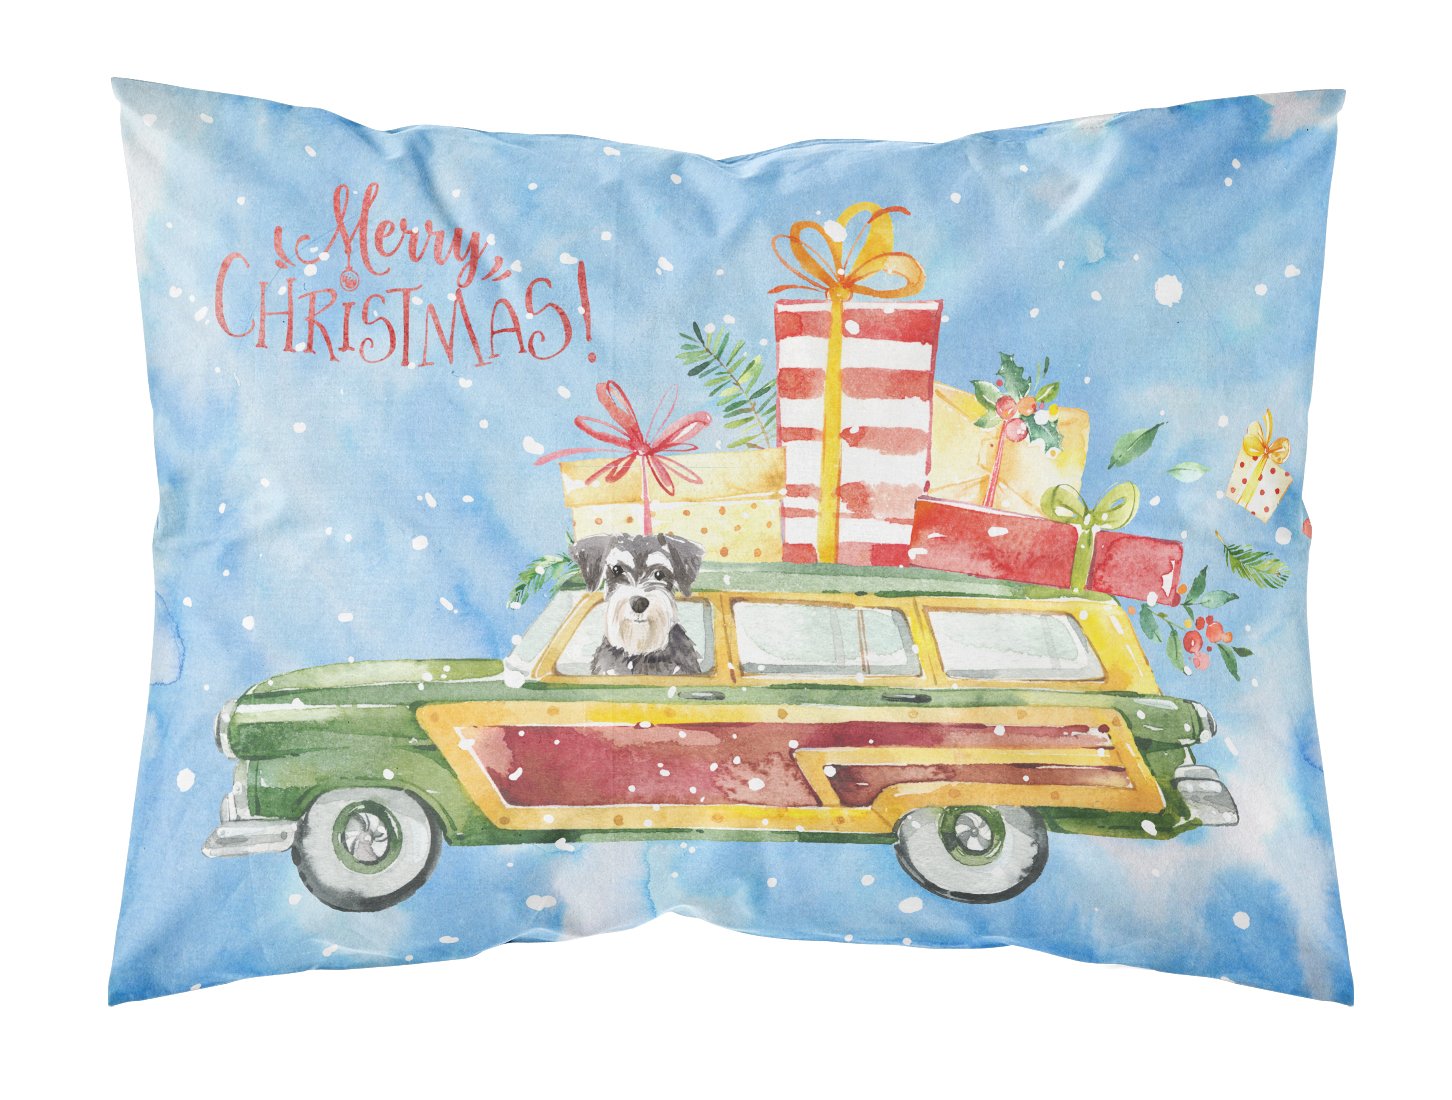 Merry Christmas Schnauzer Fabric Standard Pillowcase CK2415PILLOWCASE by Caroline's Treasures